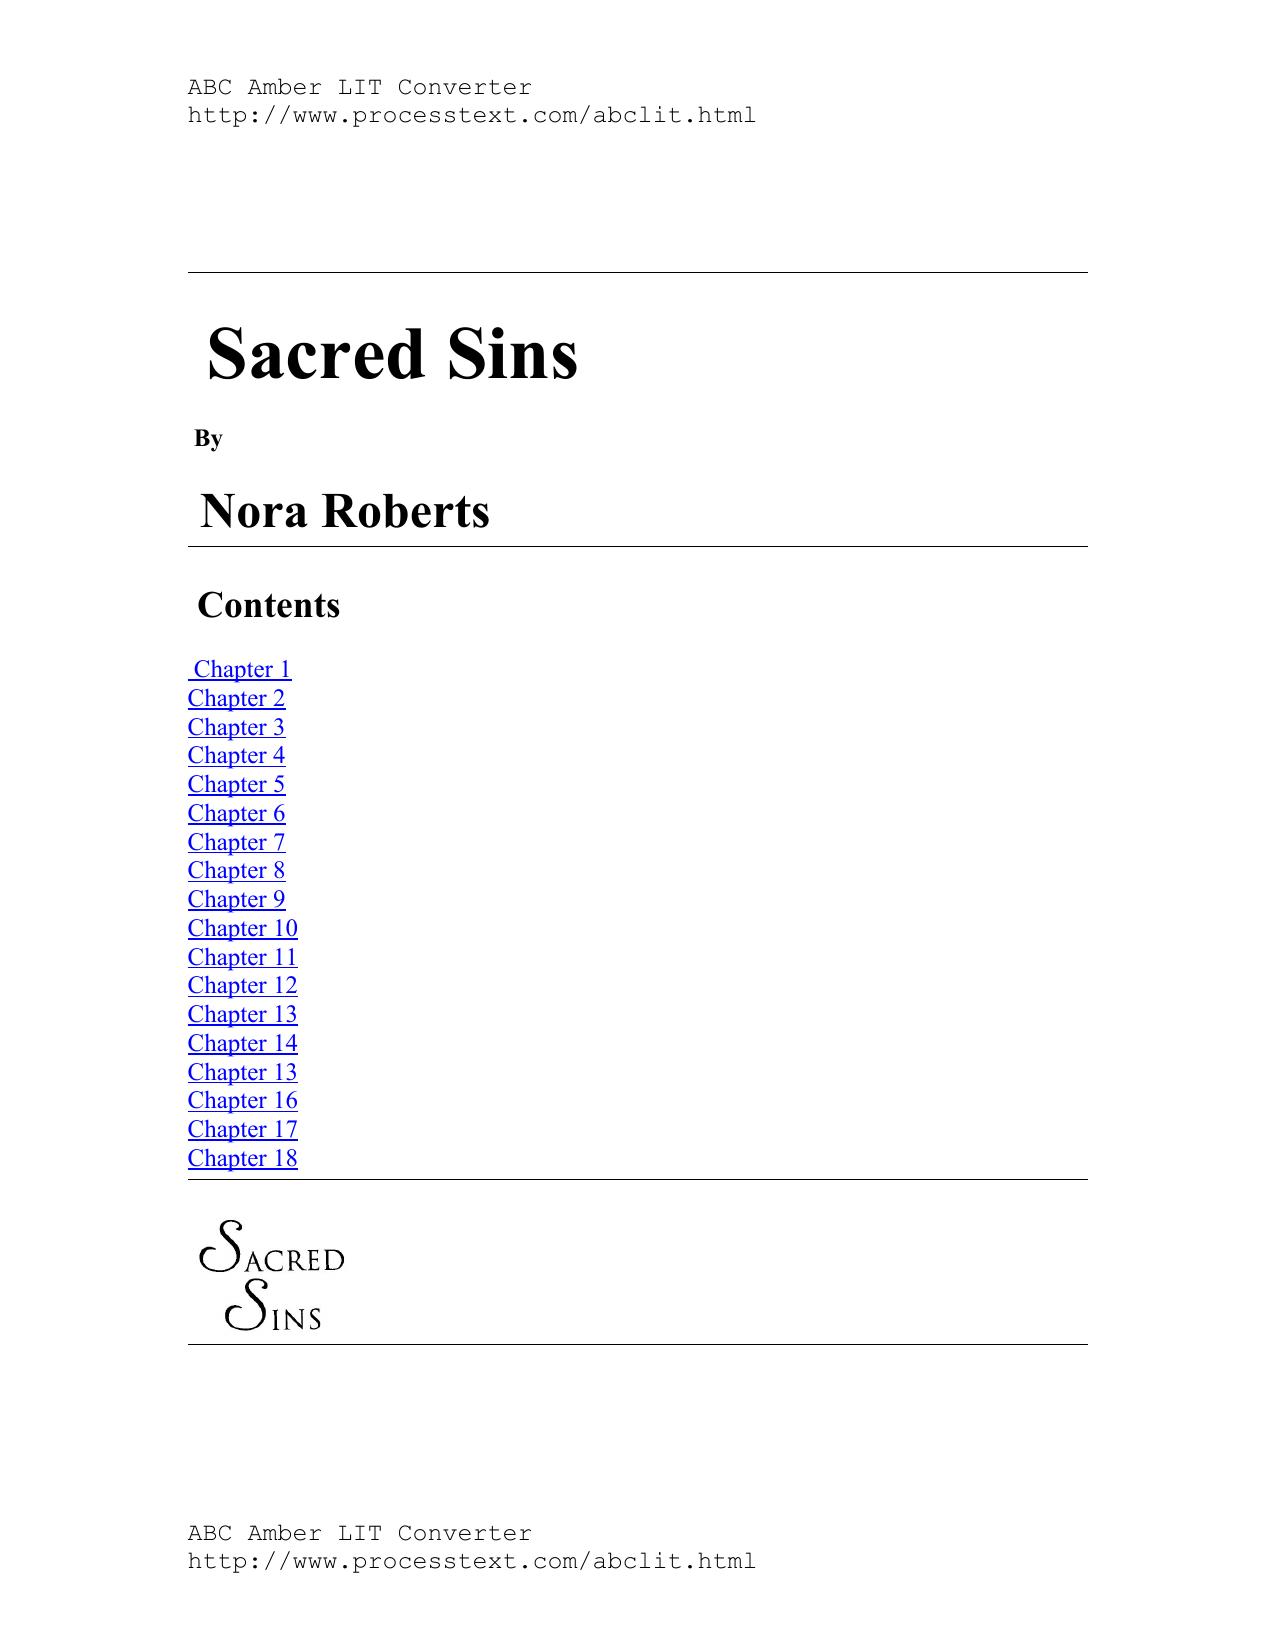 Nora Roberts - Sacred Sins 01